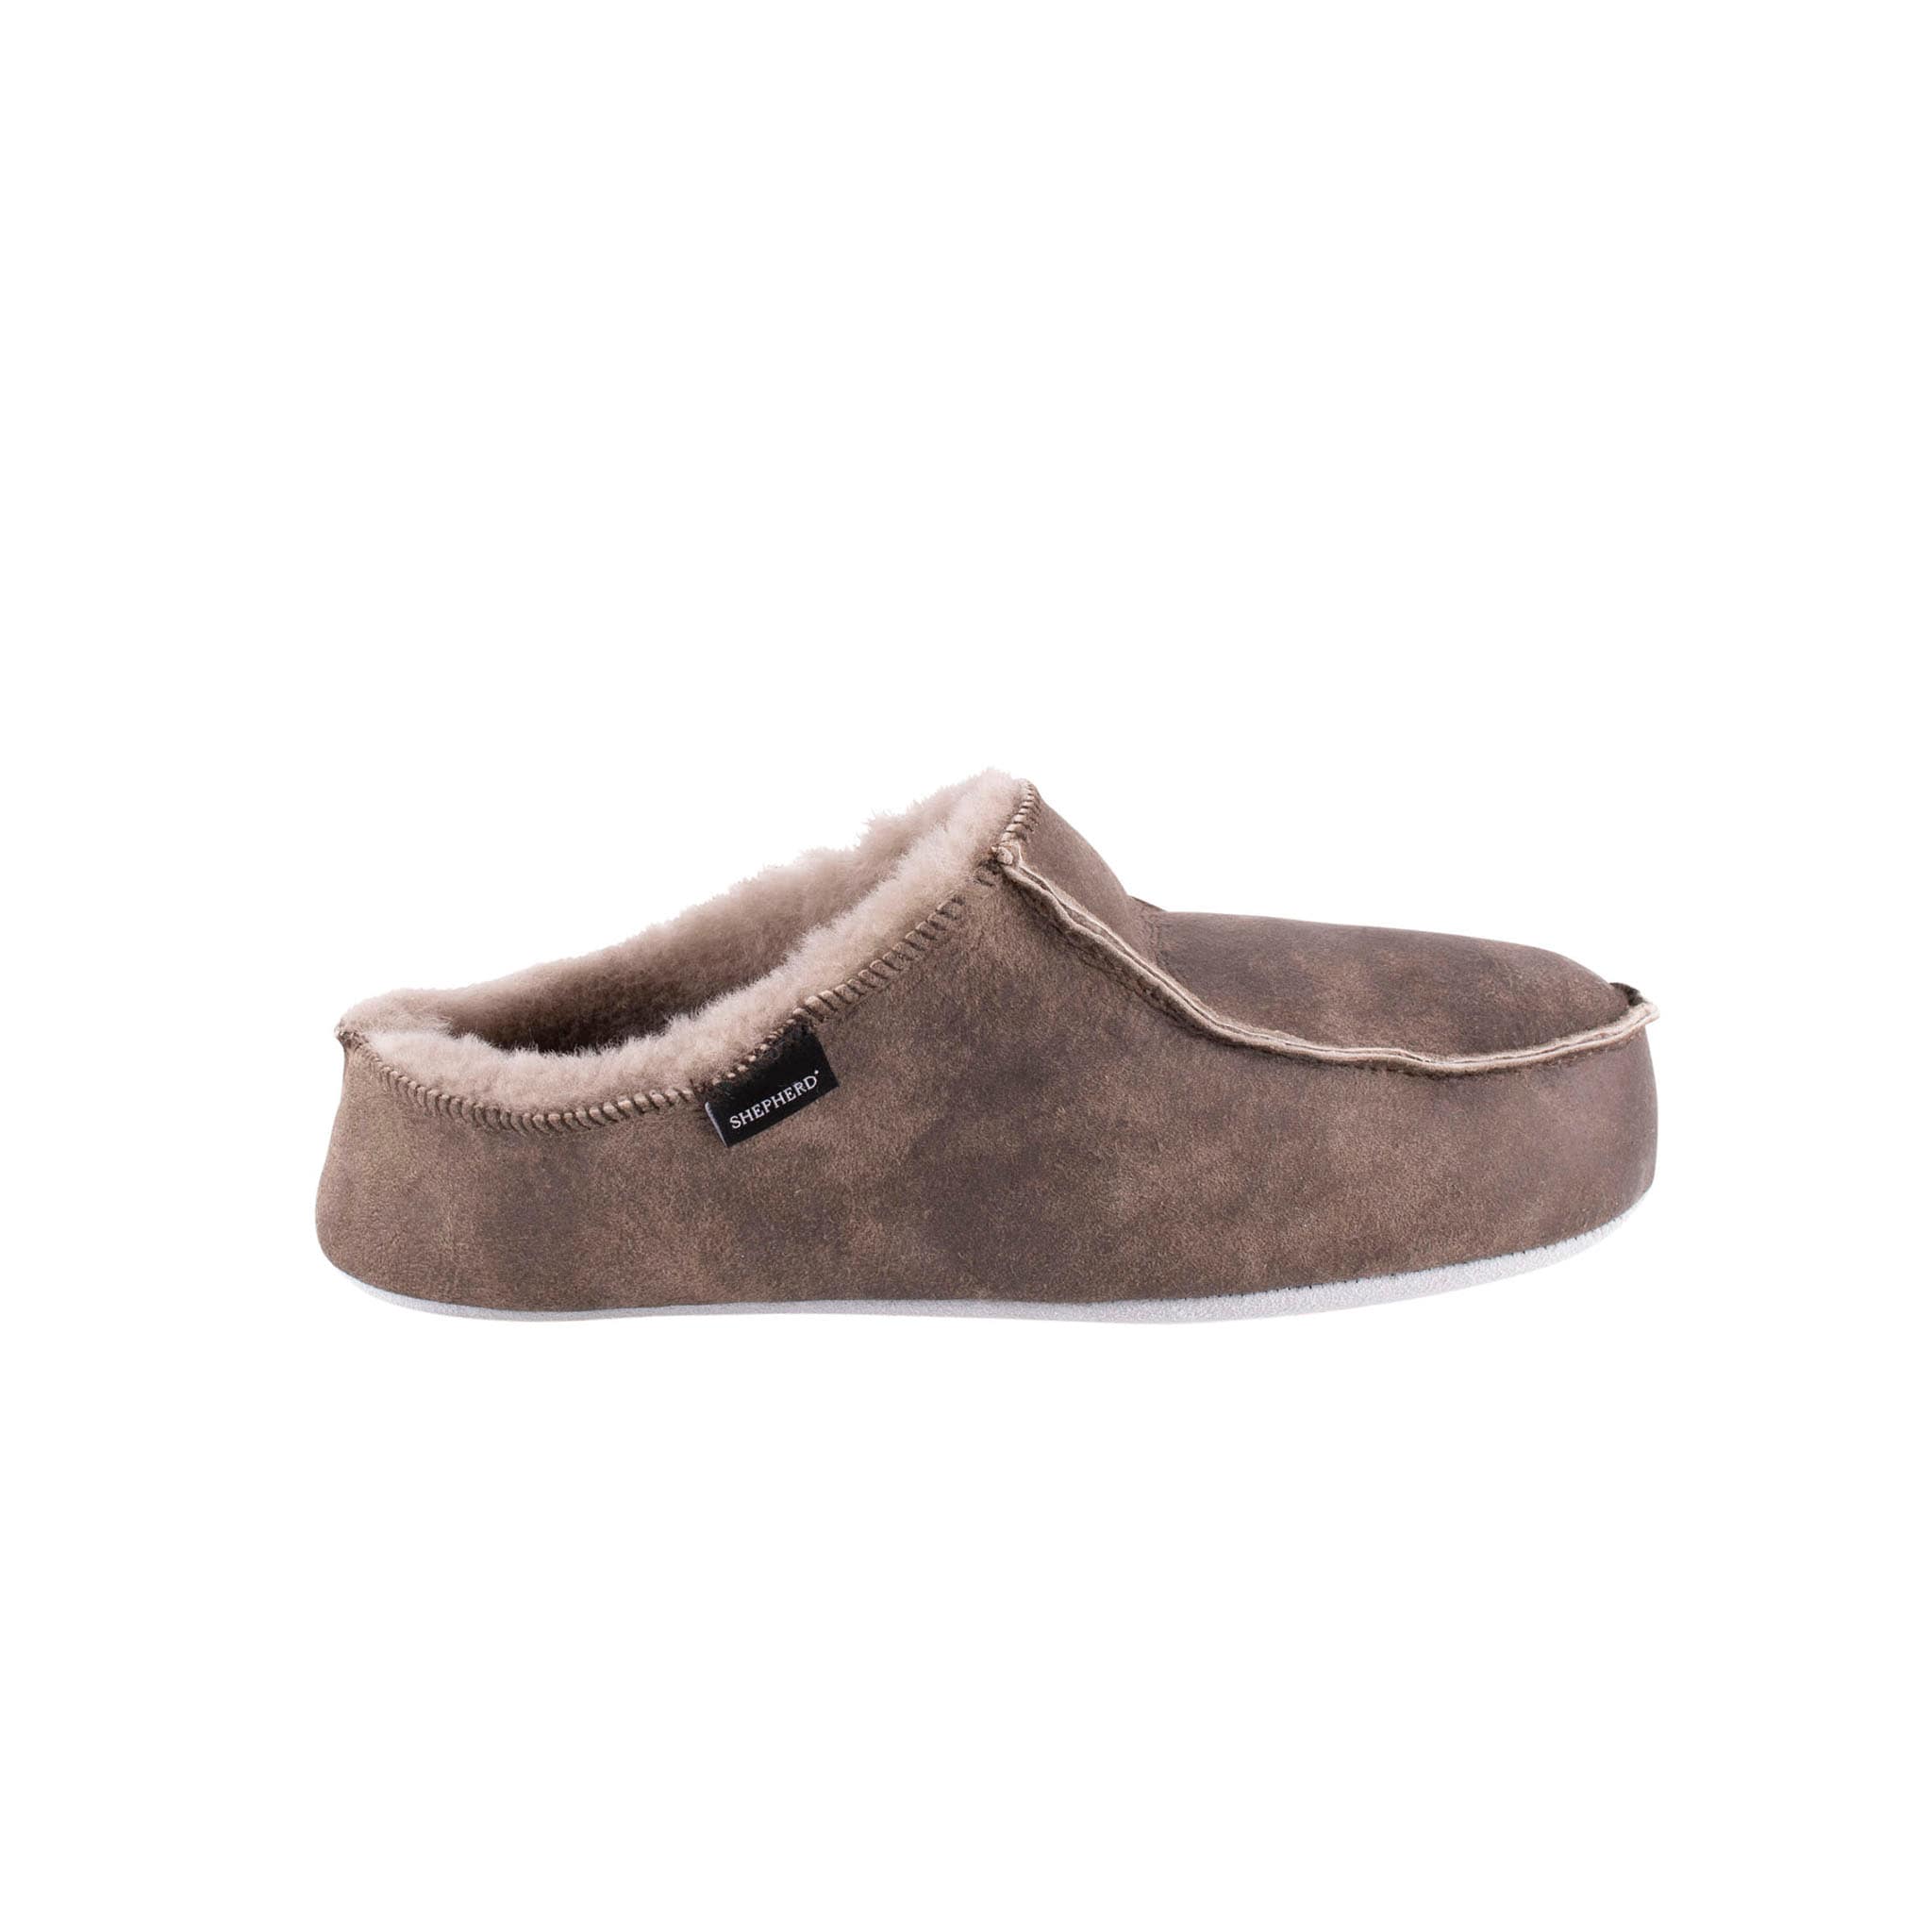 Shepherd Birro slippers - Antique stone